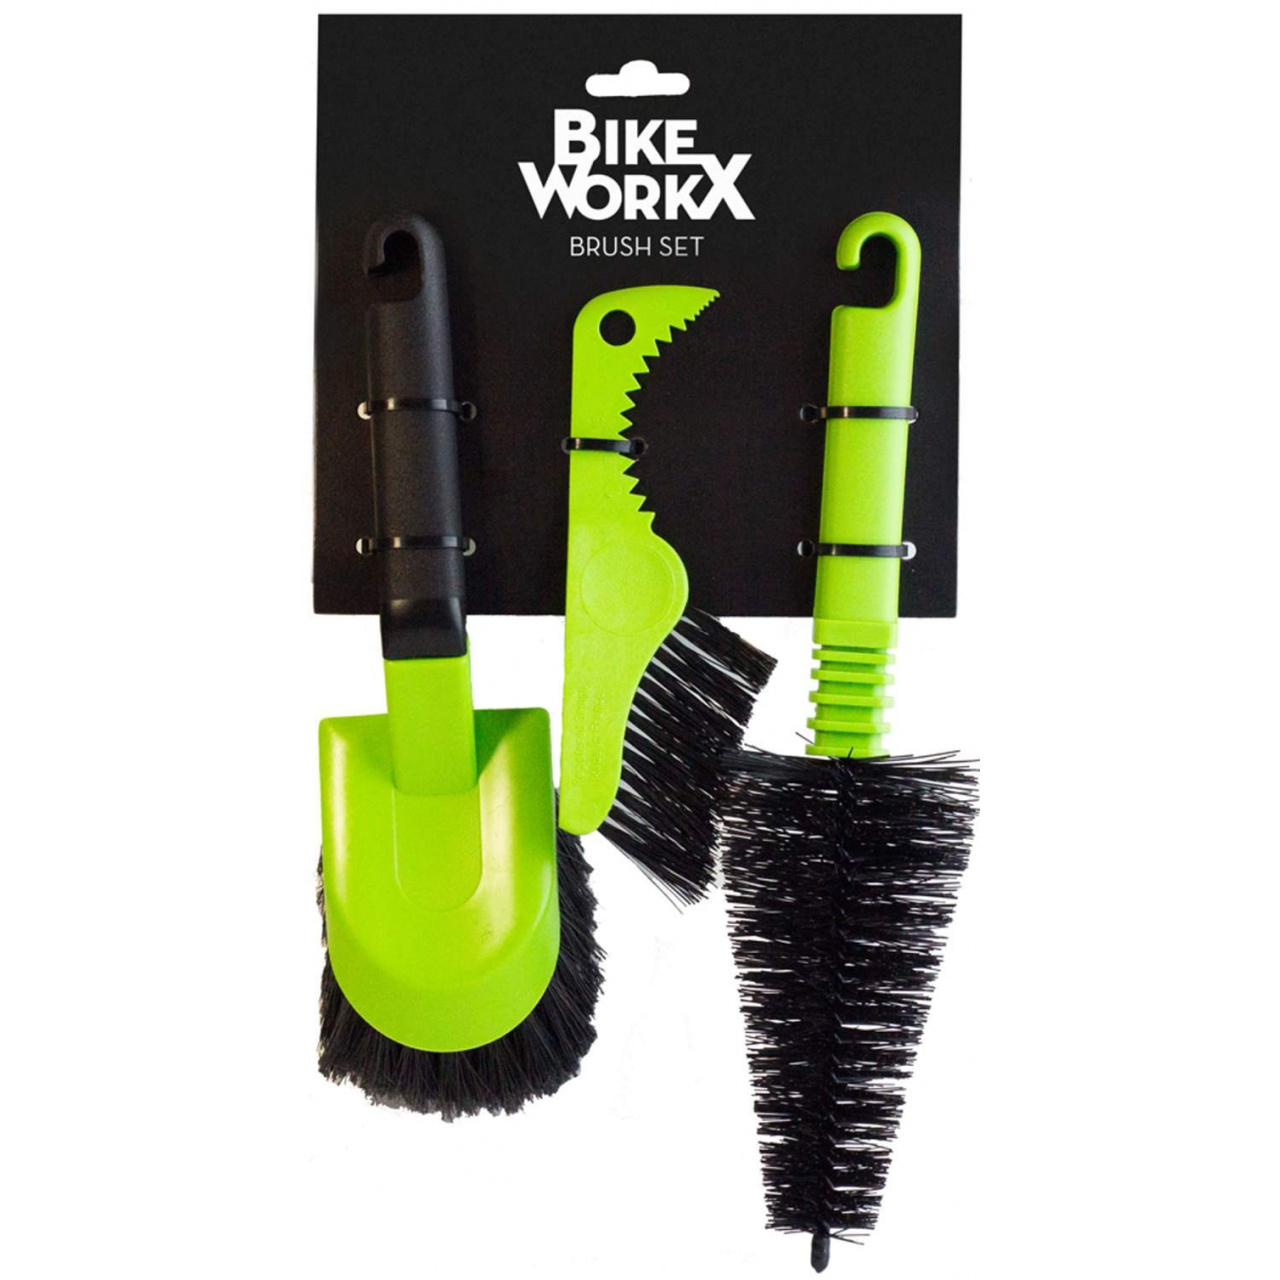 Bike WorkX Brush Set